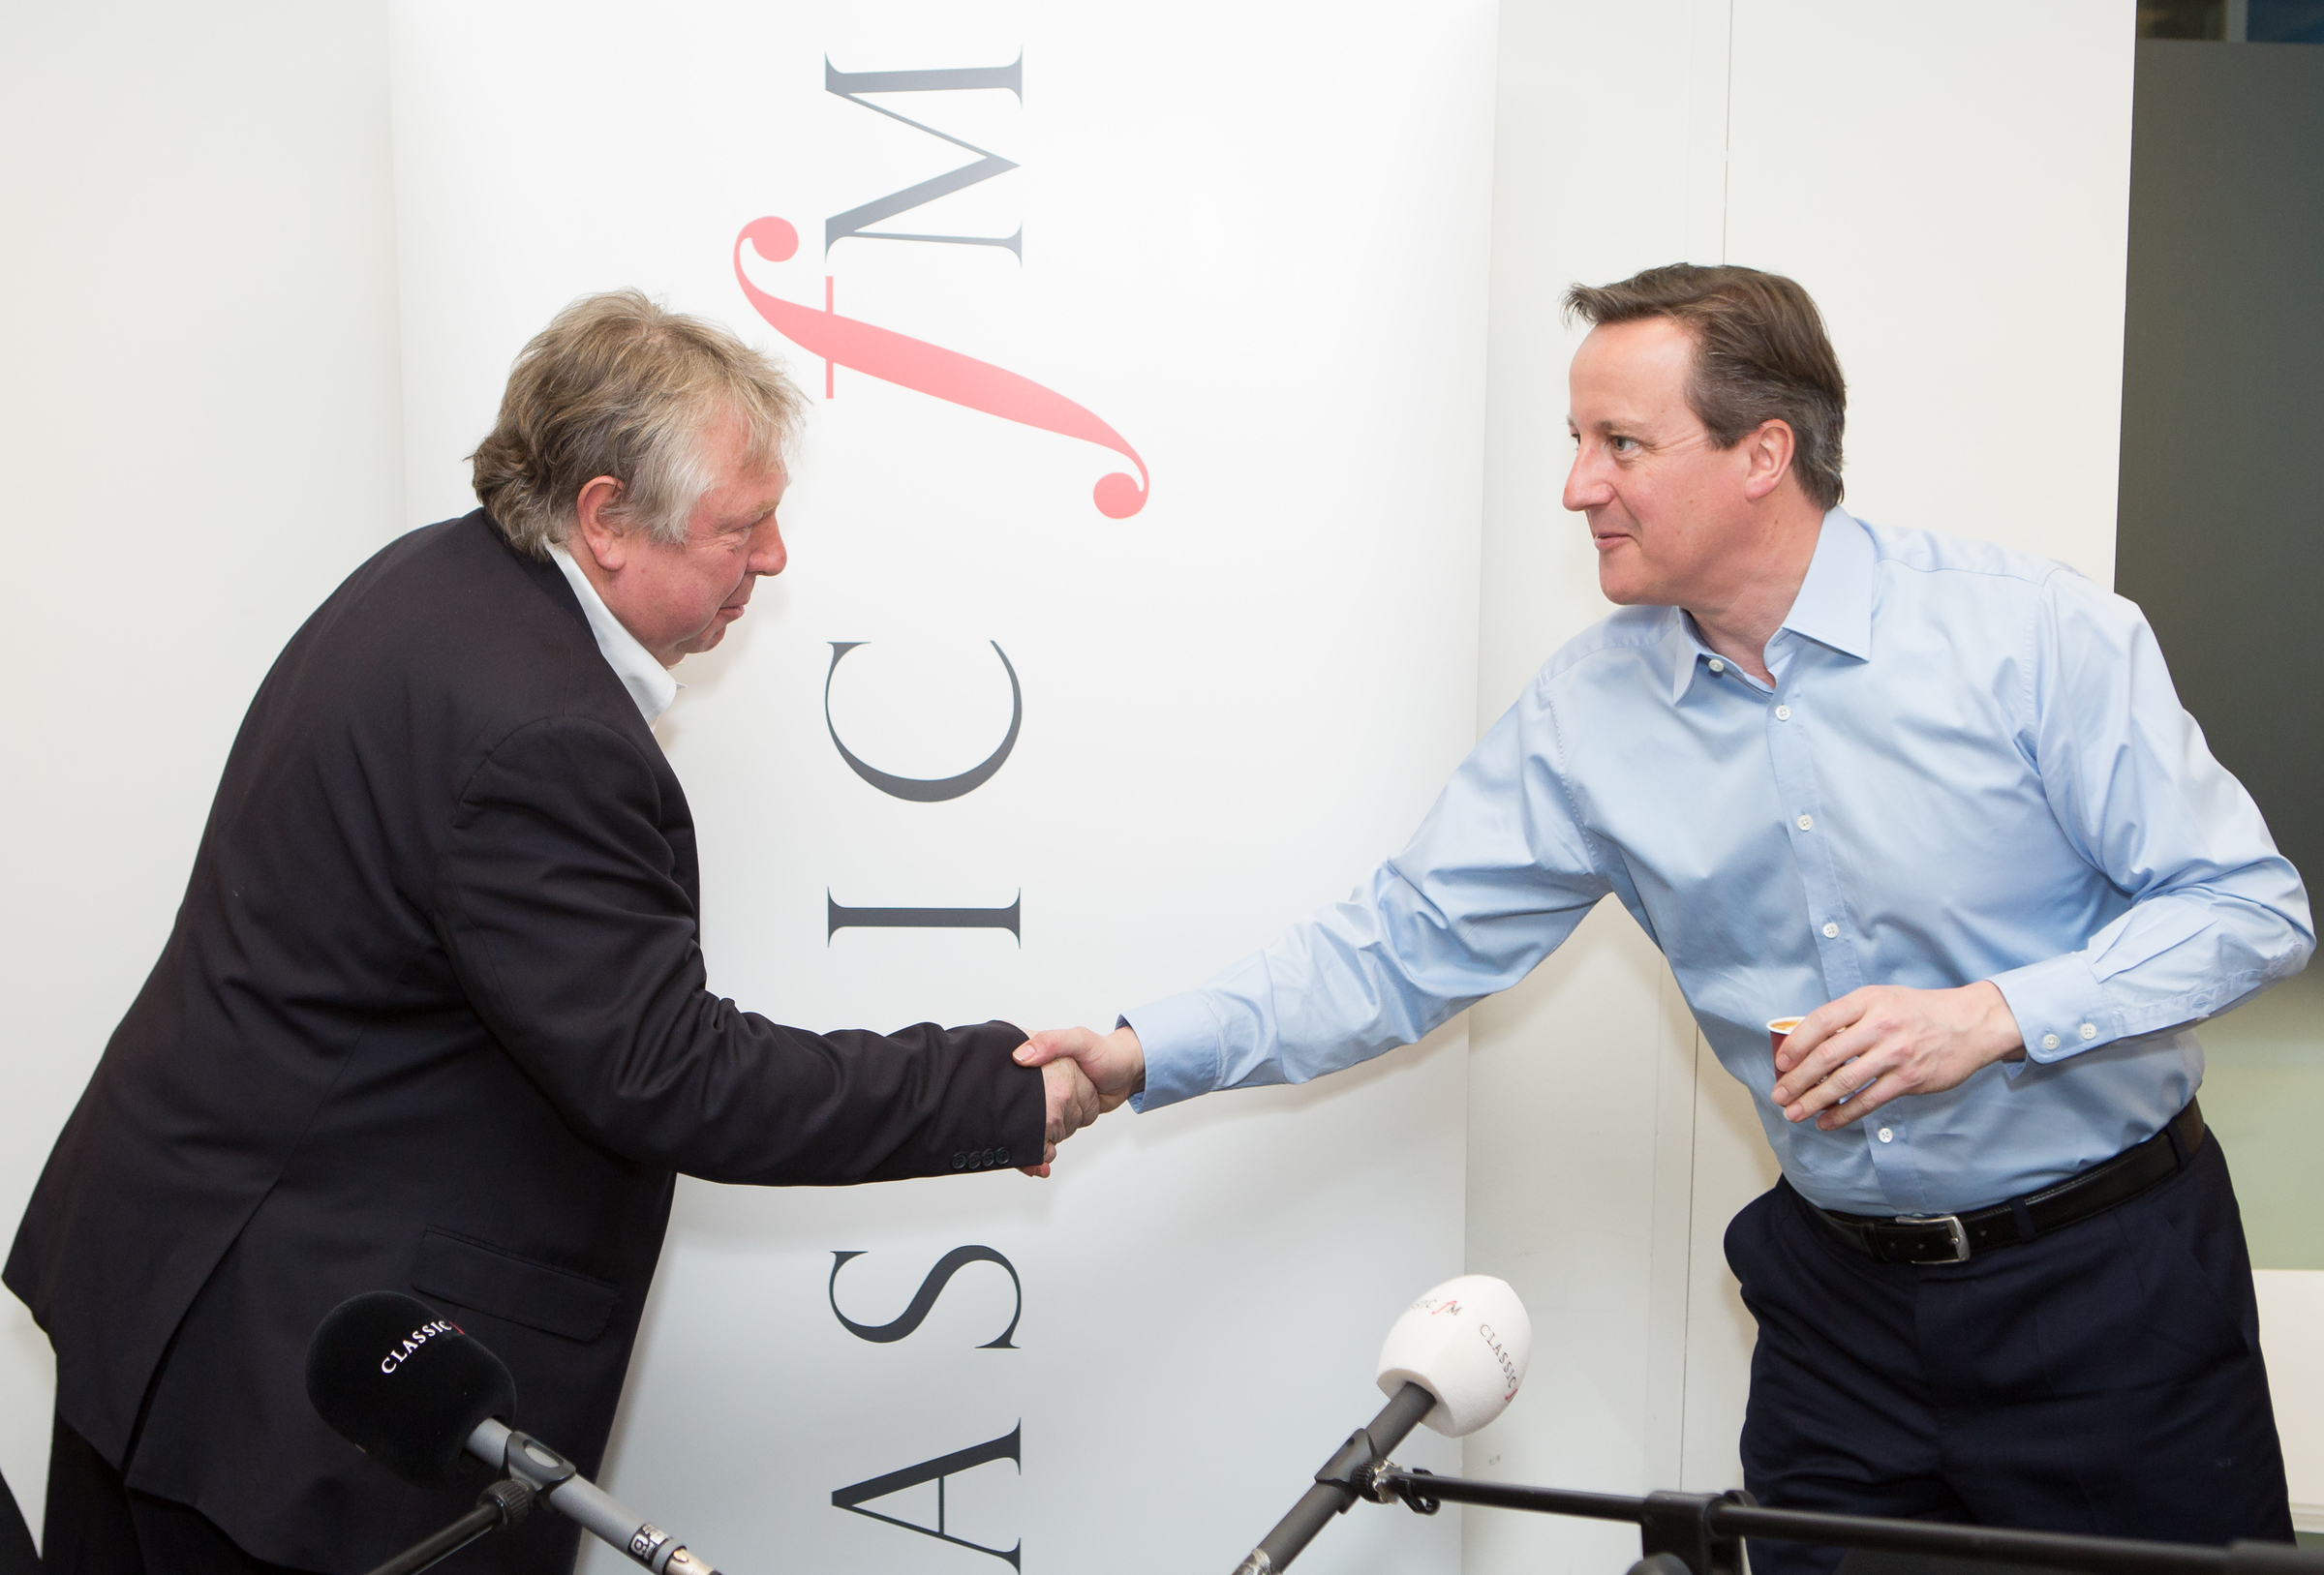 David Cameron and Nick Ferrari